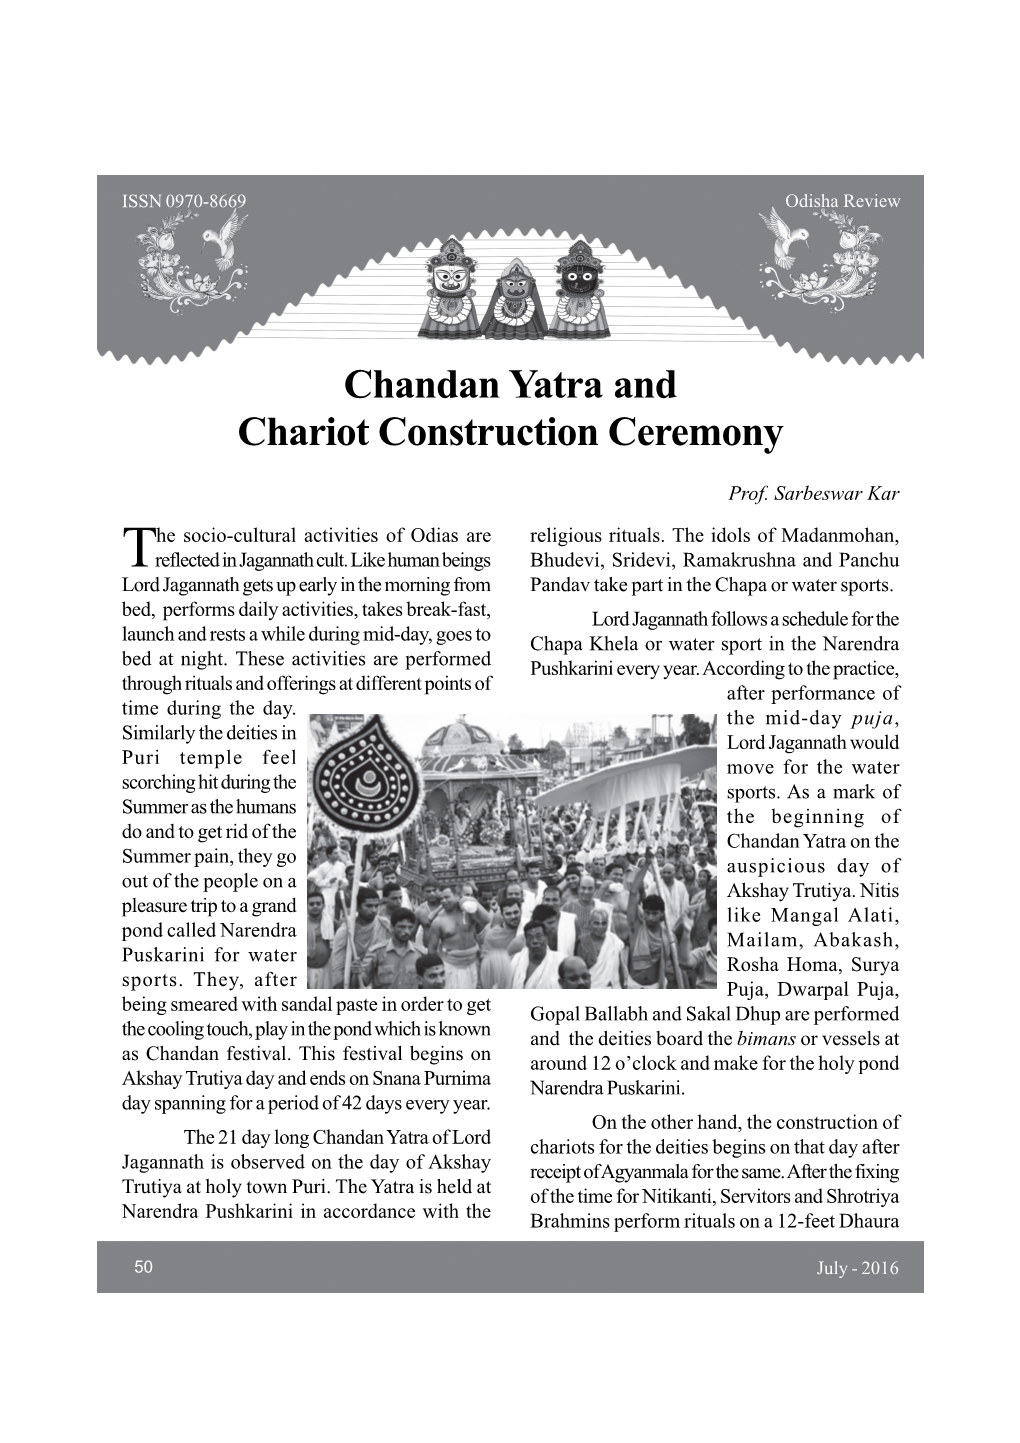 Chandan Yatra and Chariot Construction Ceremony